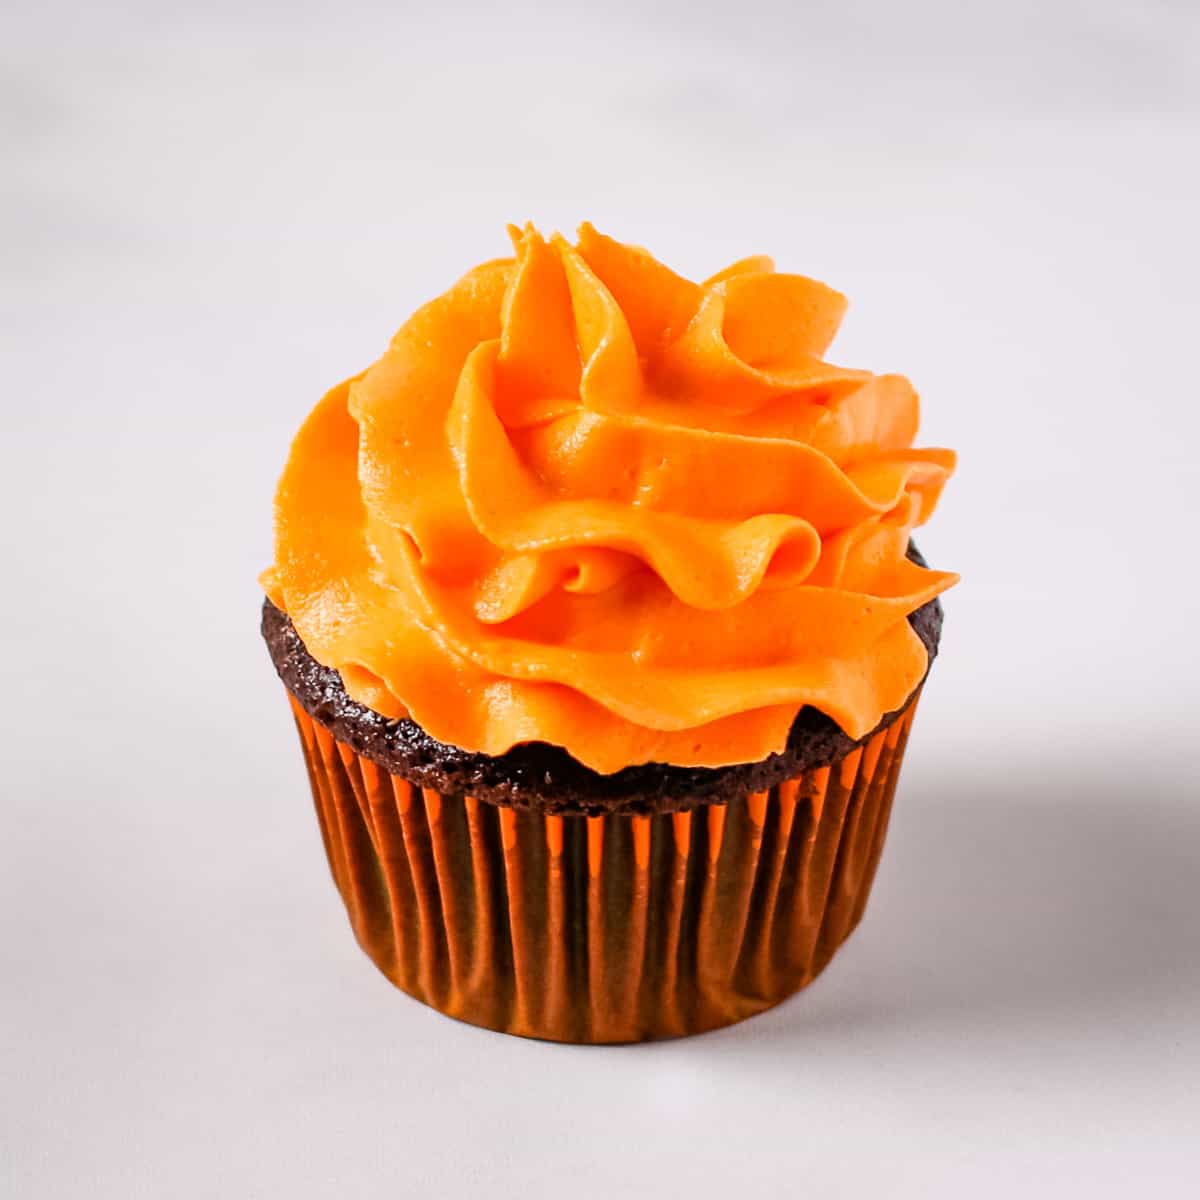 Orange buttercream swirl on top of a chocolate cupcake.